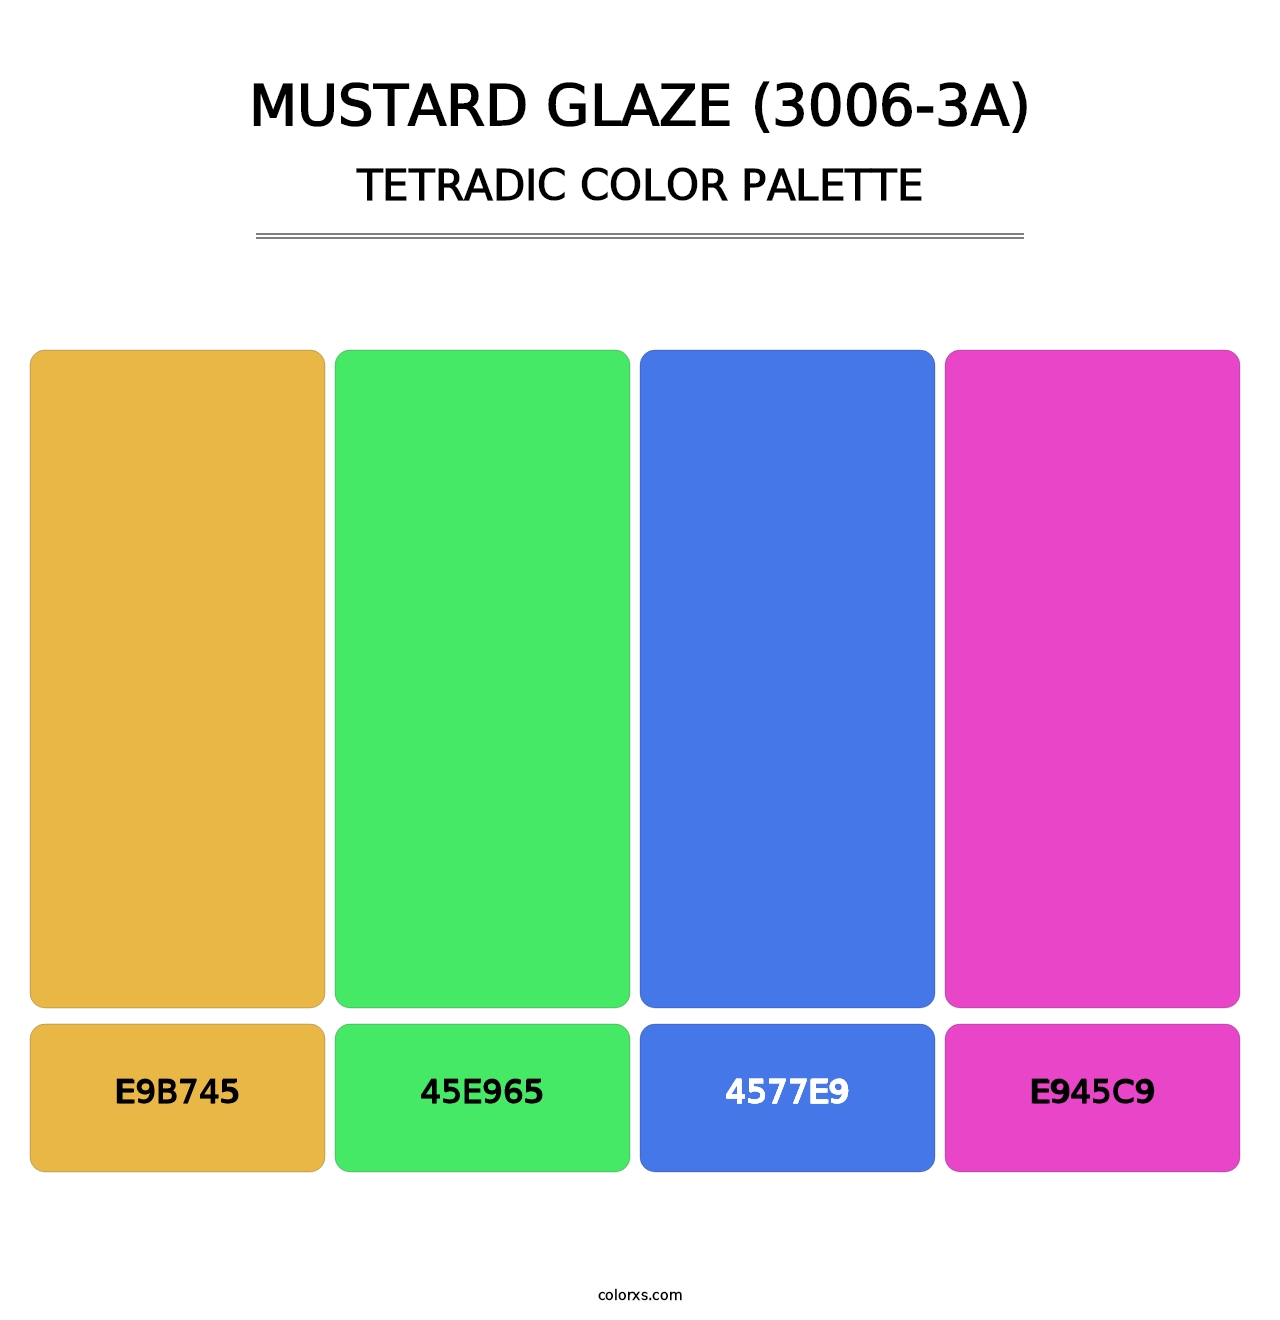 Mustard Glaze (3006-3A) - Tetradic Color Palette